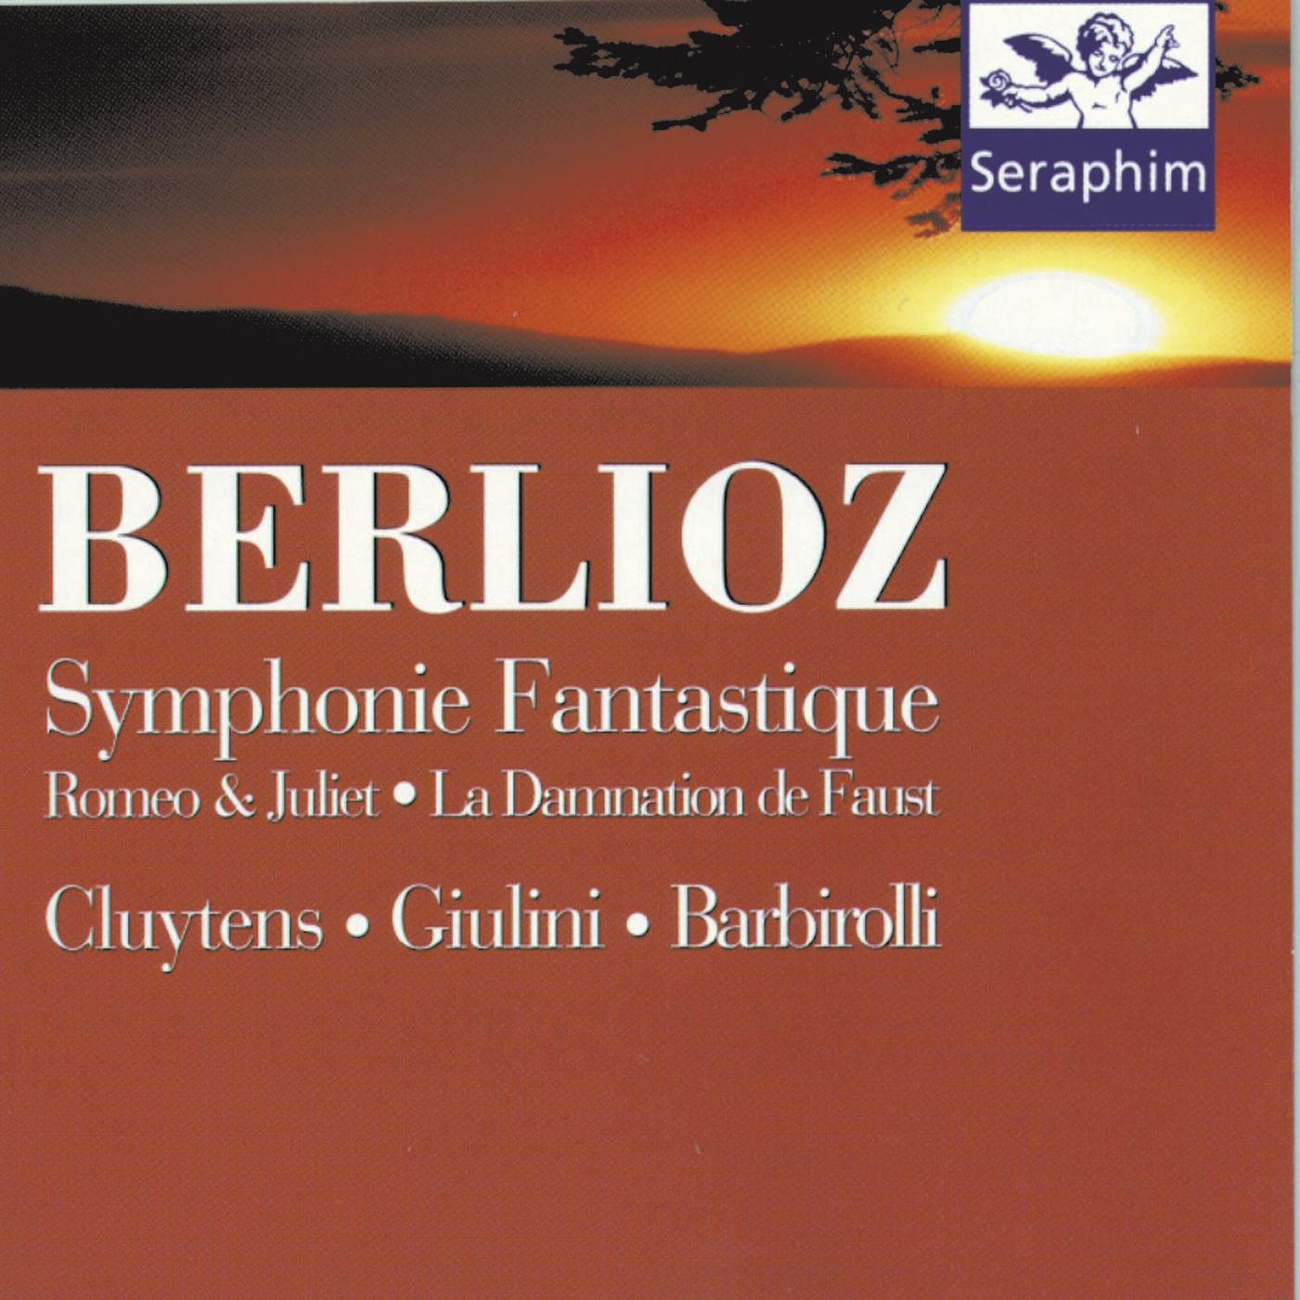 Symphonie fantastique Op. 14 (1989 Digital Remaster): IV. Marche au supplice